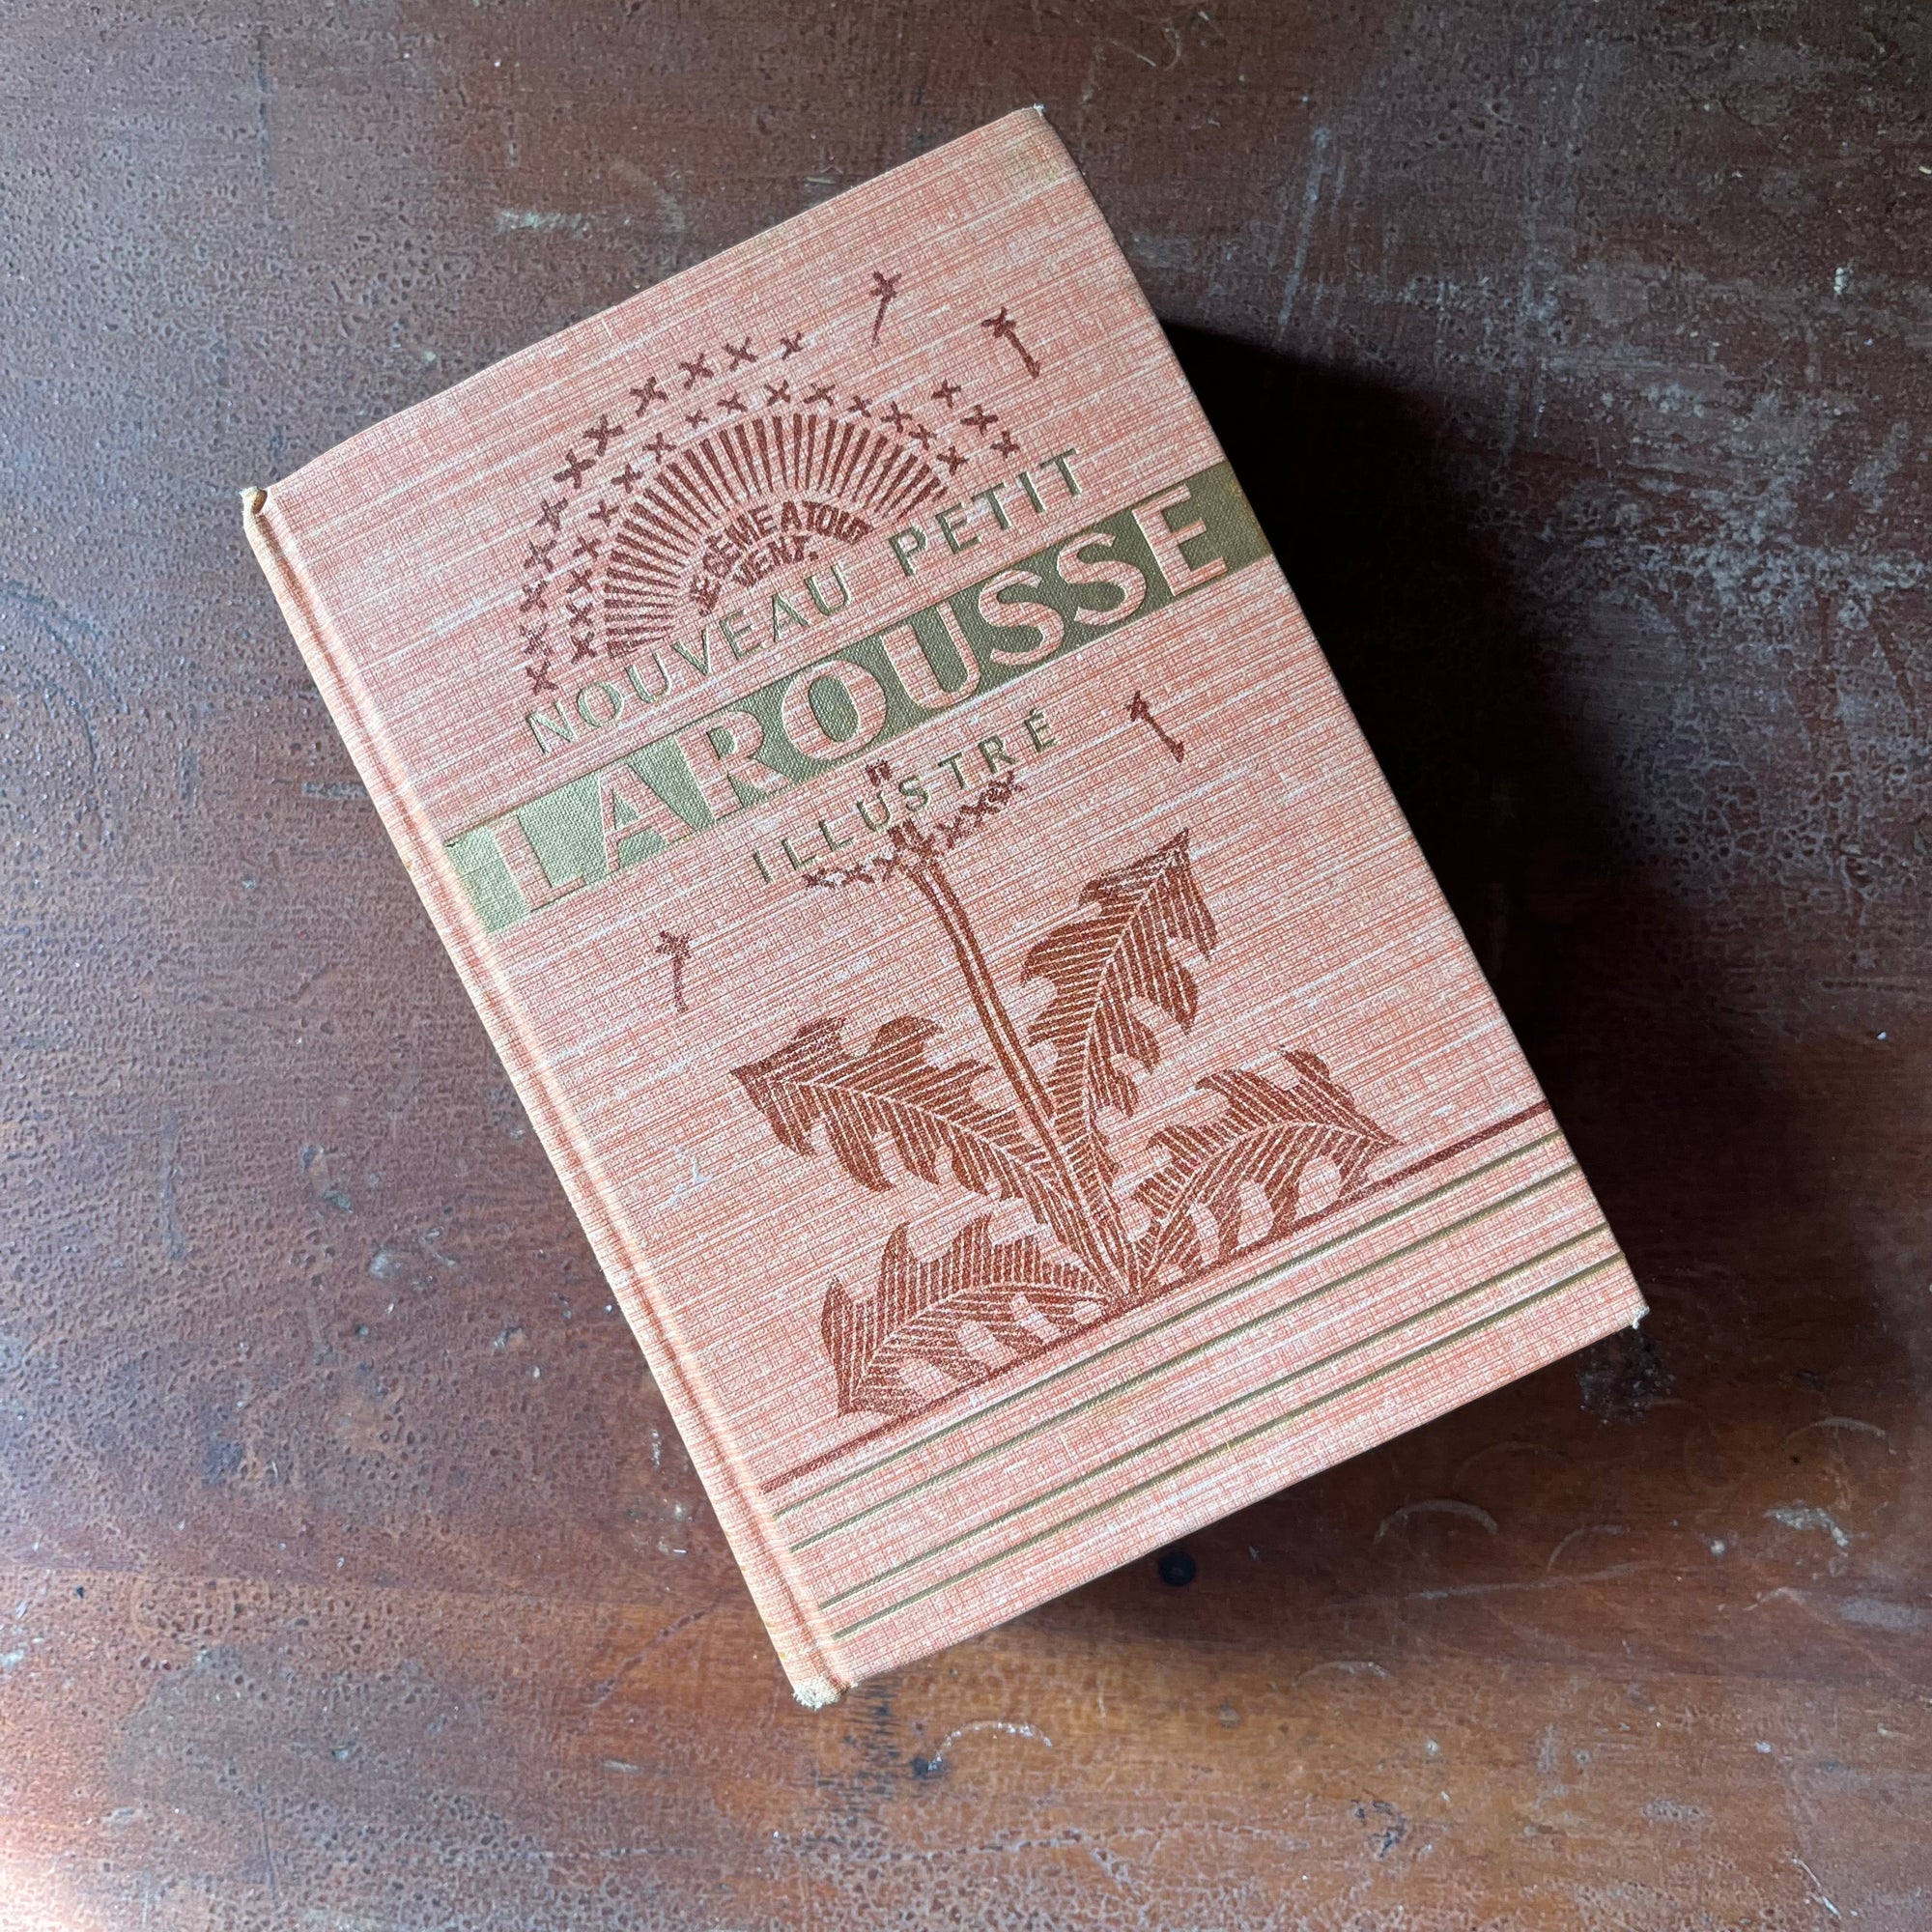 Nouveau Petit Larousse Illustre Dictionnaire Encyclopedique - 1955 Edition French Dictionary - view of the embossed front cover